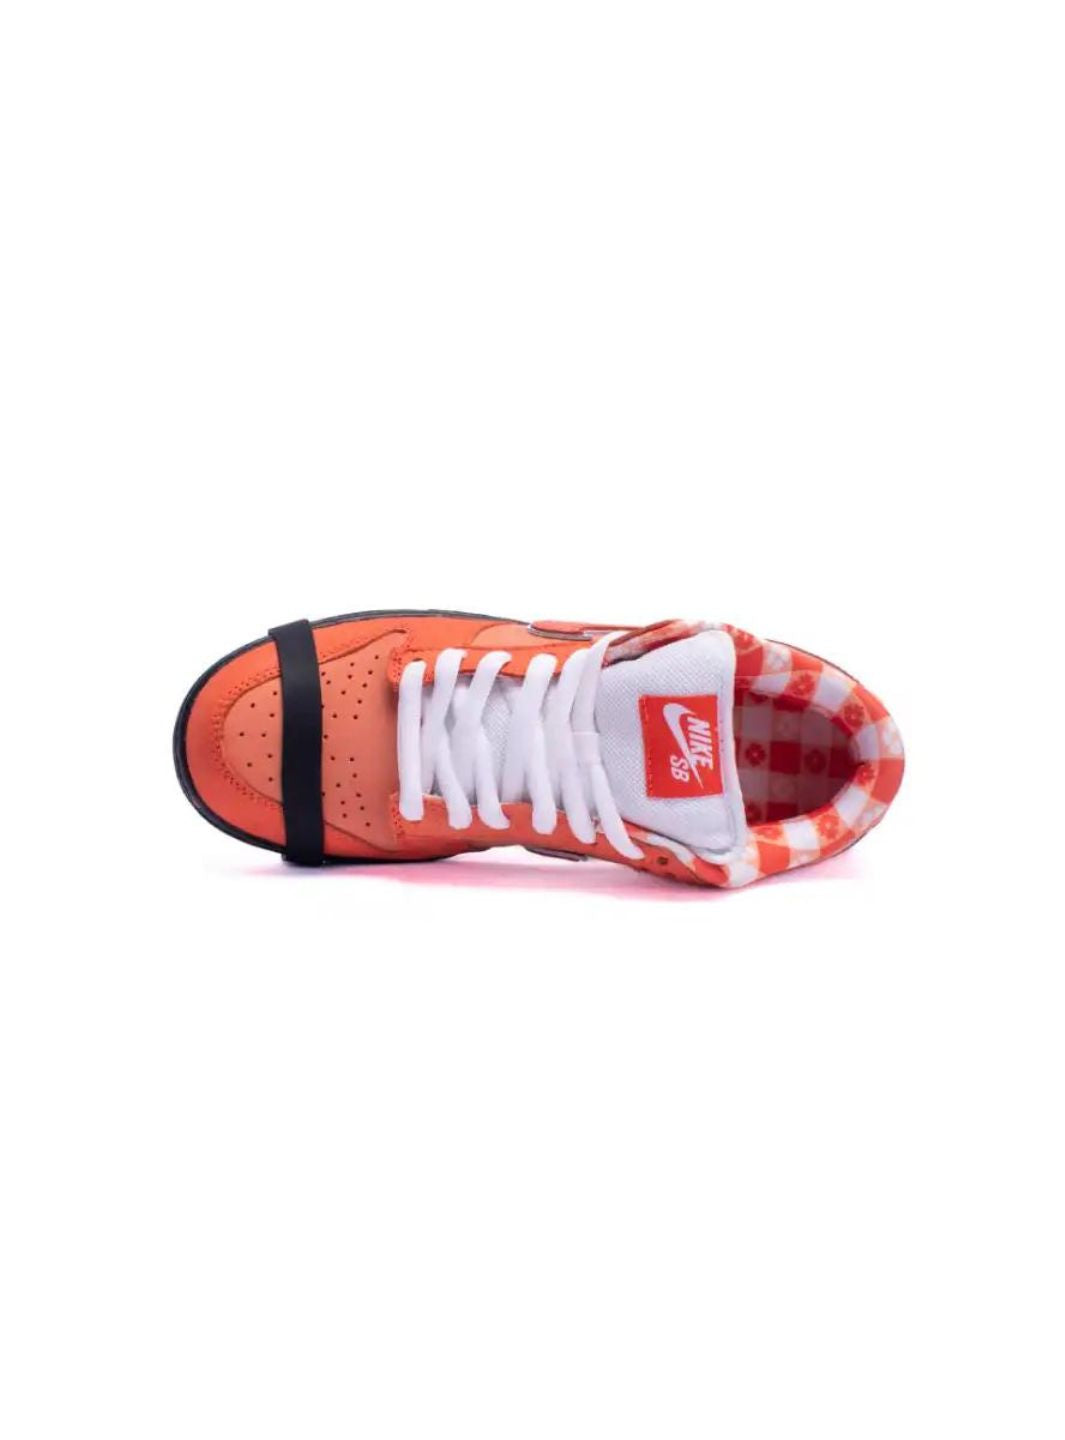 Nike SB Dunk Low Lobster Orange